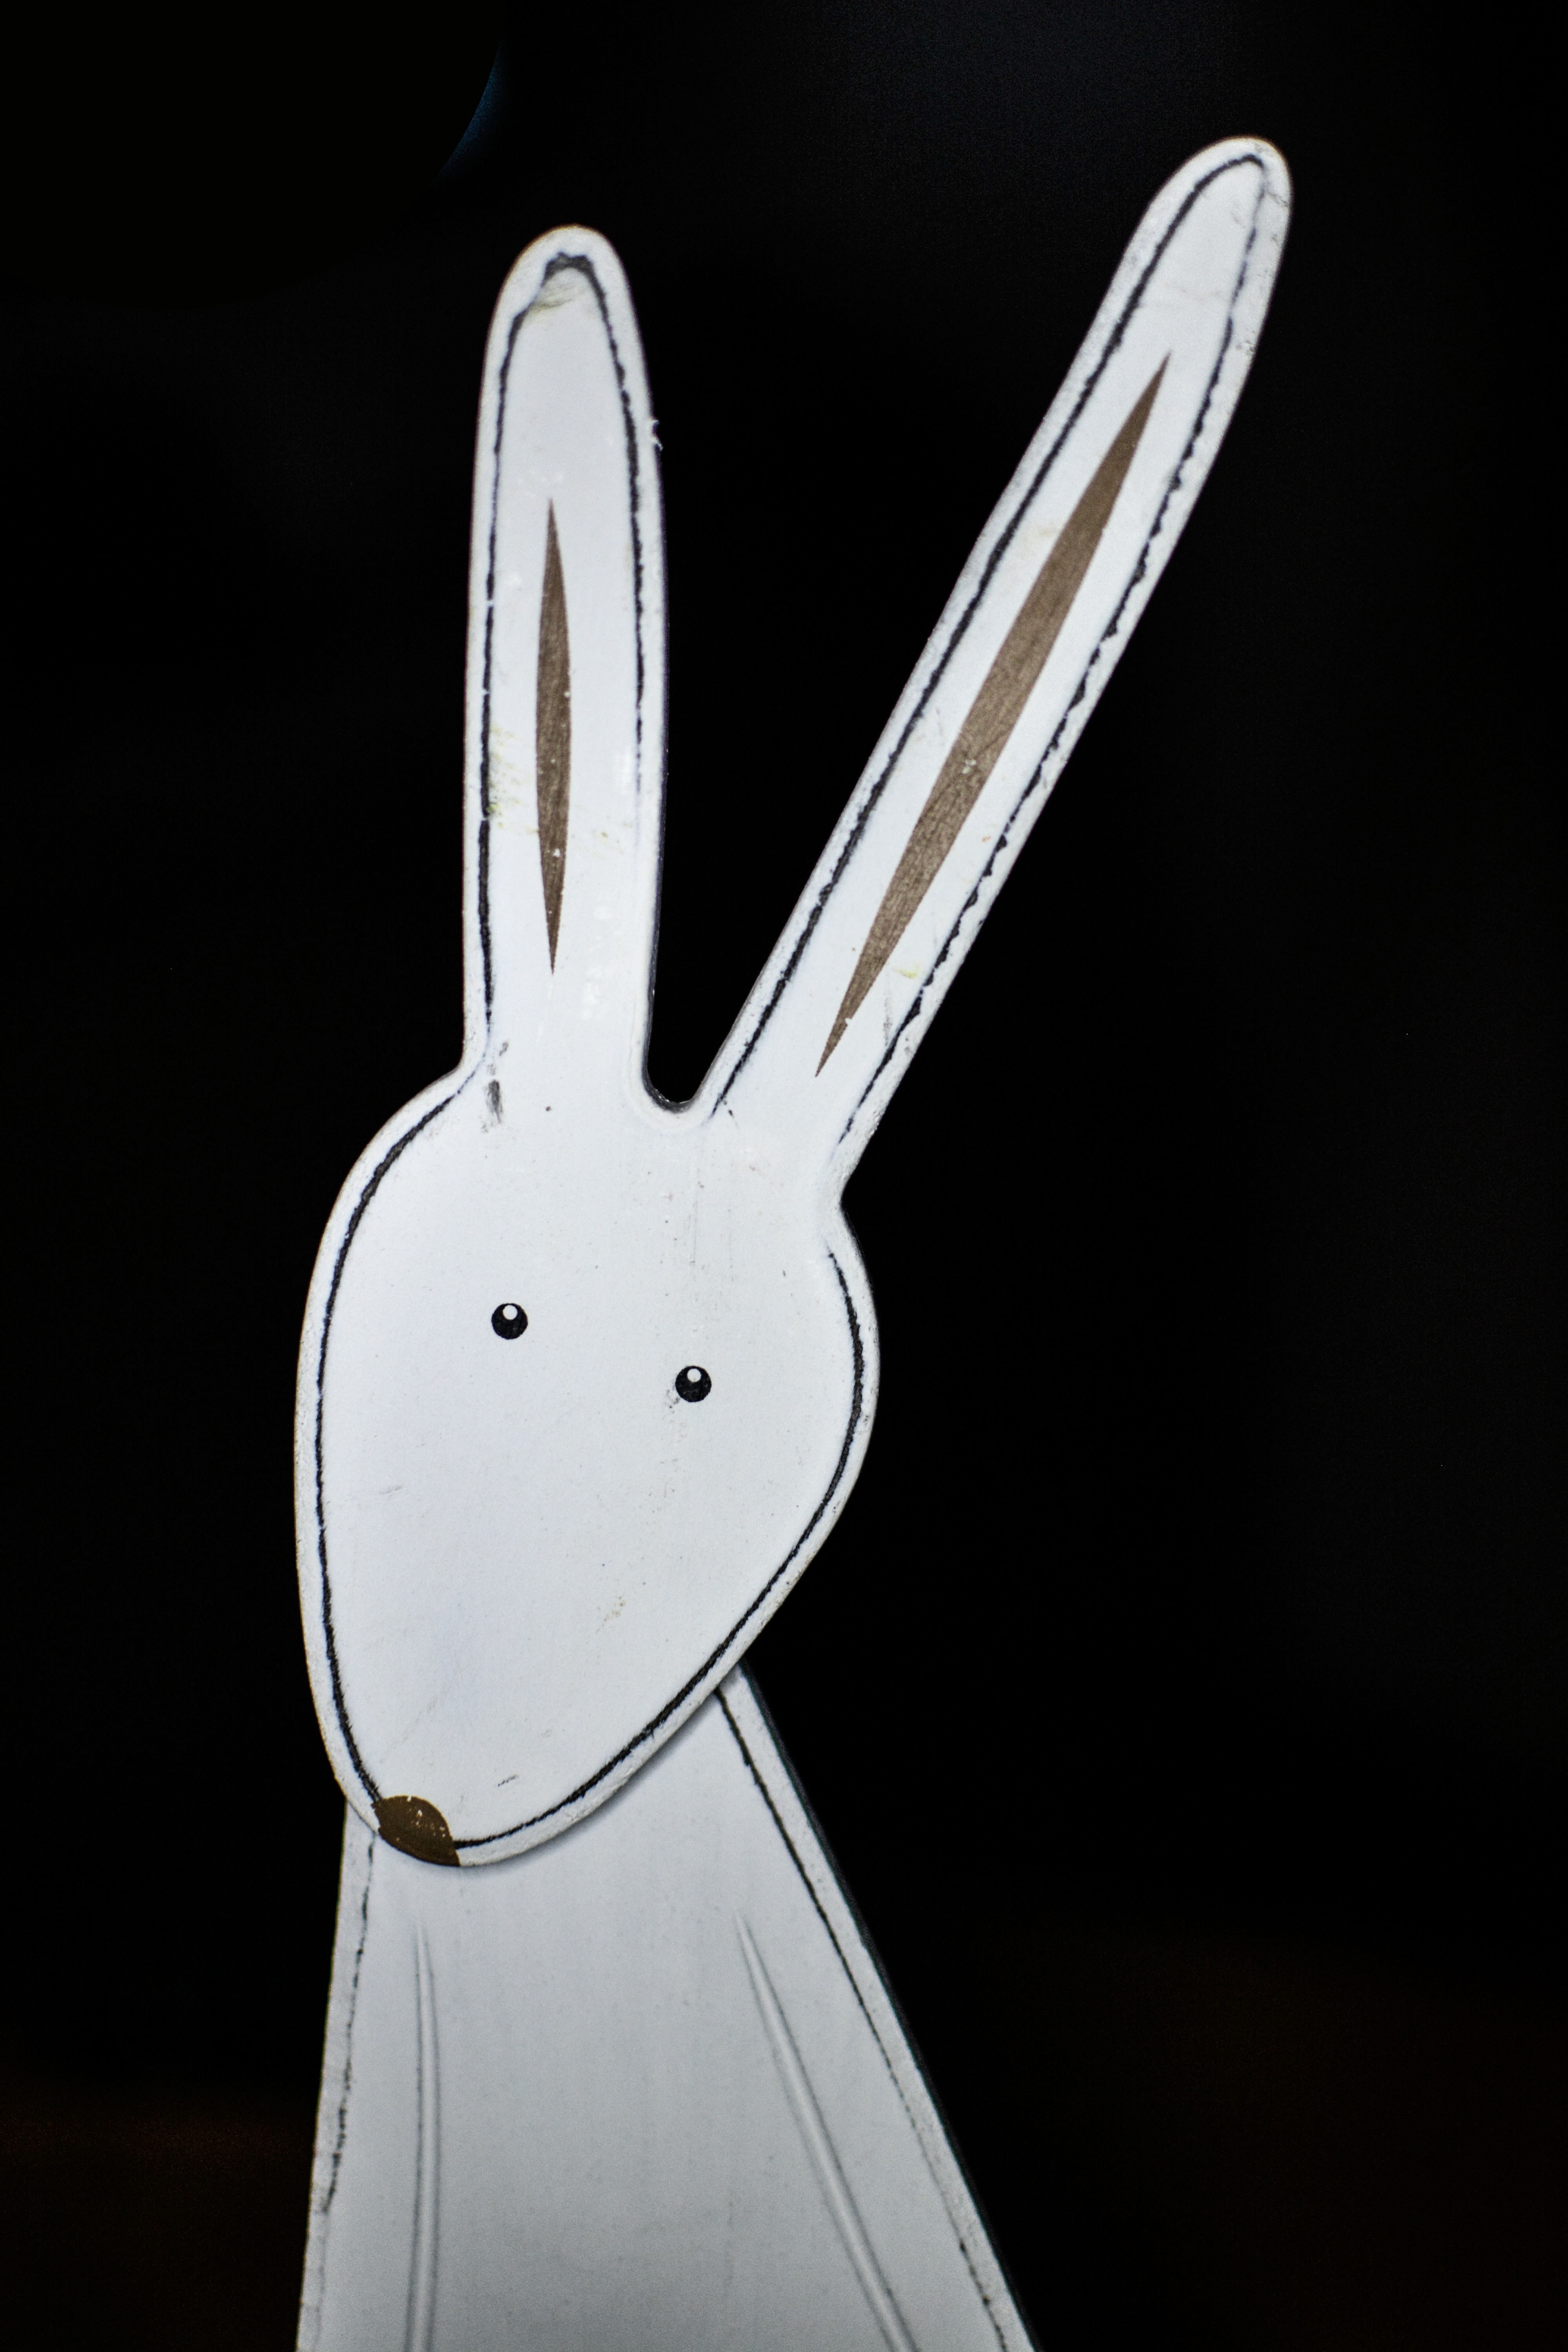 white and brown rabbit illustration